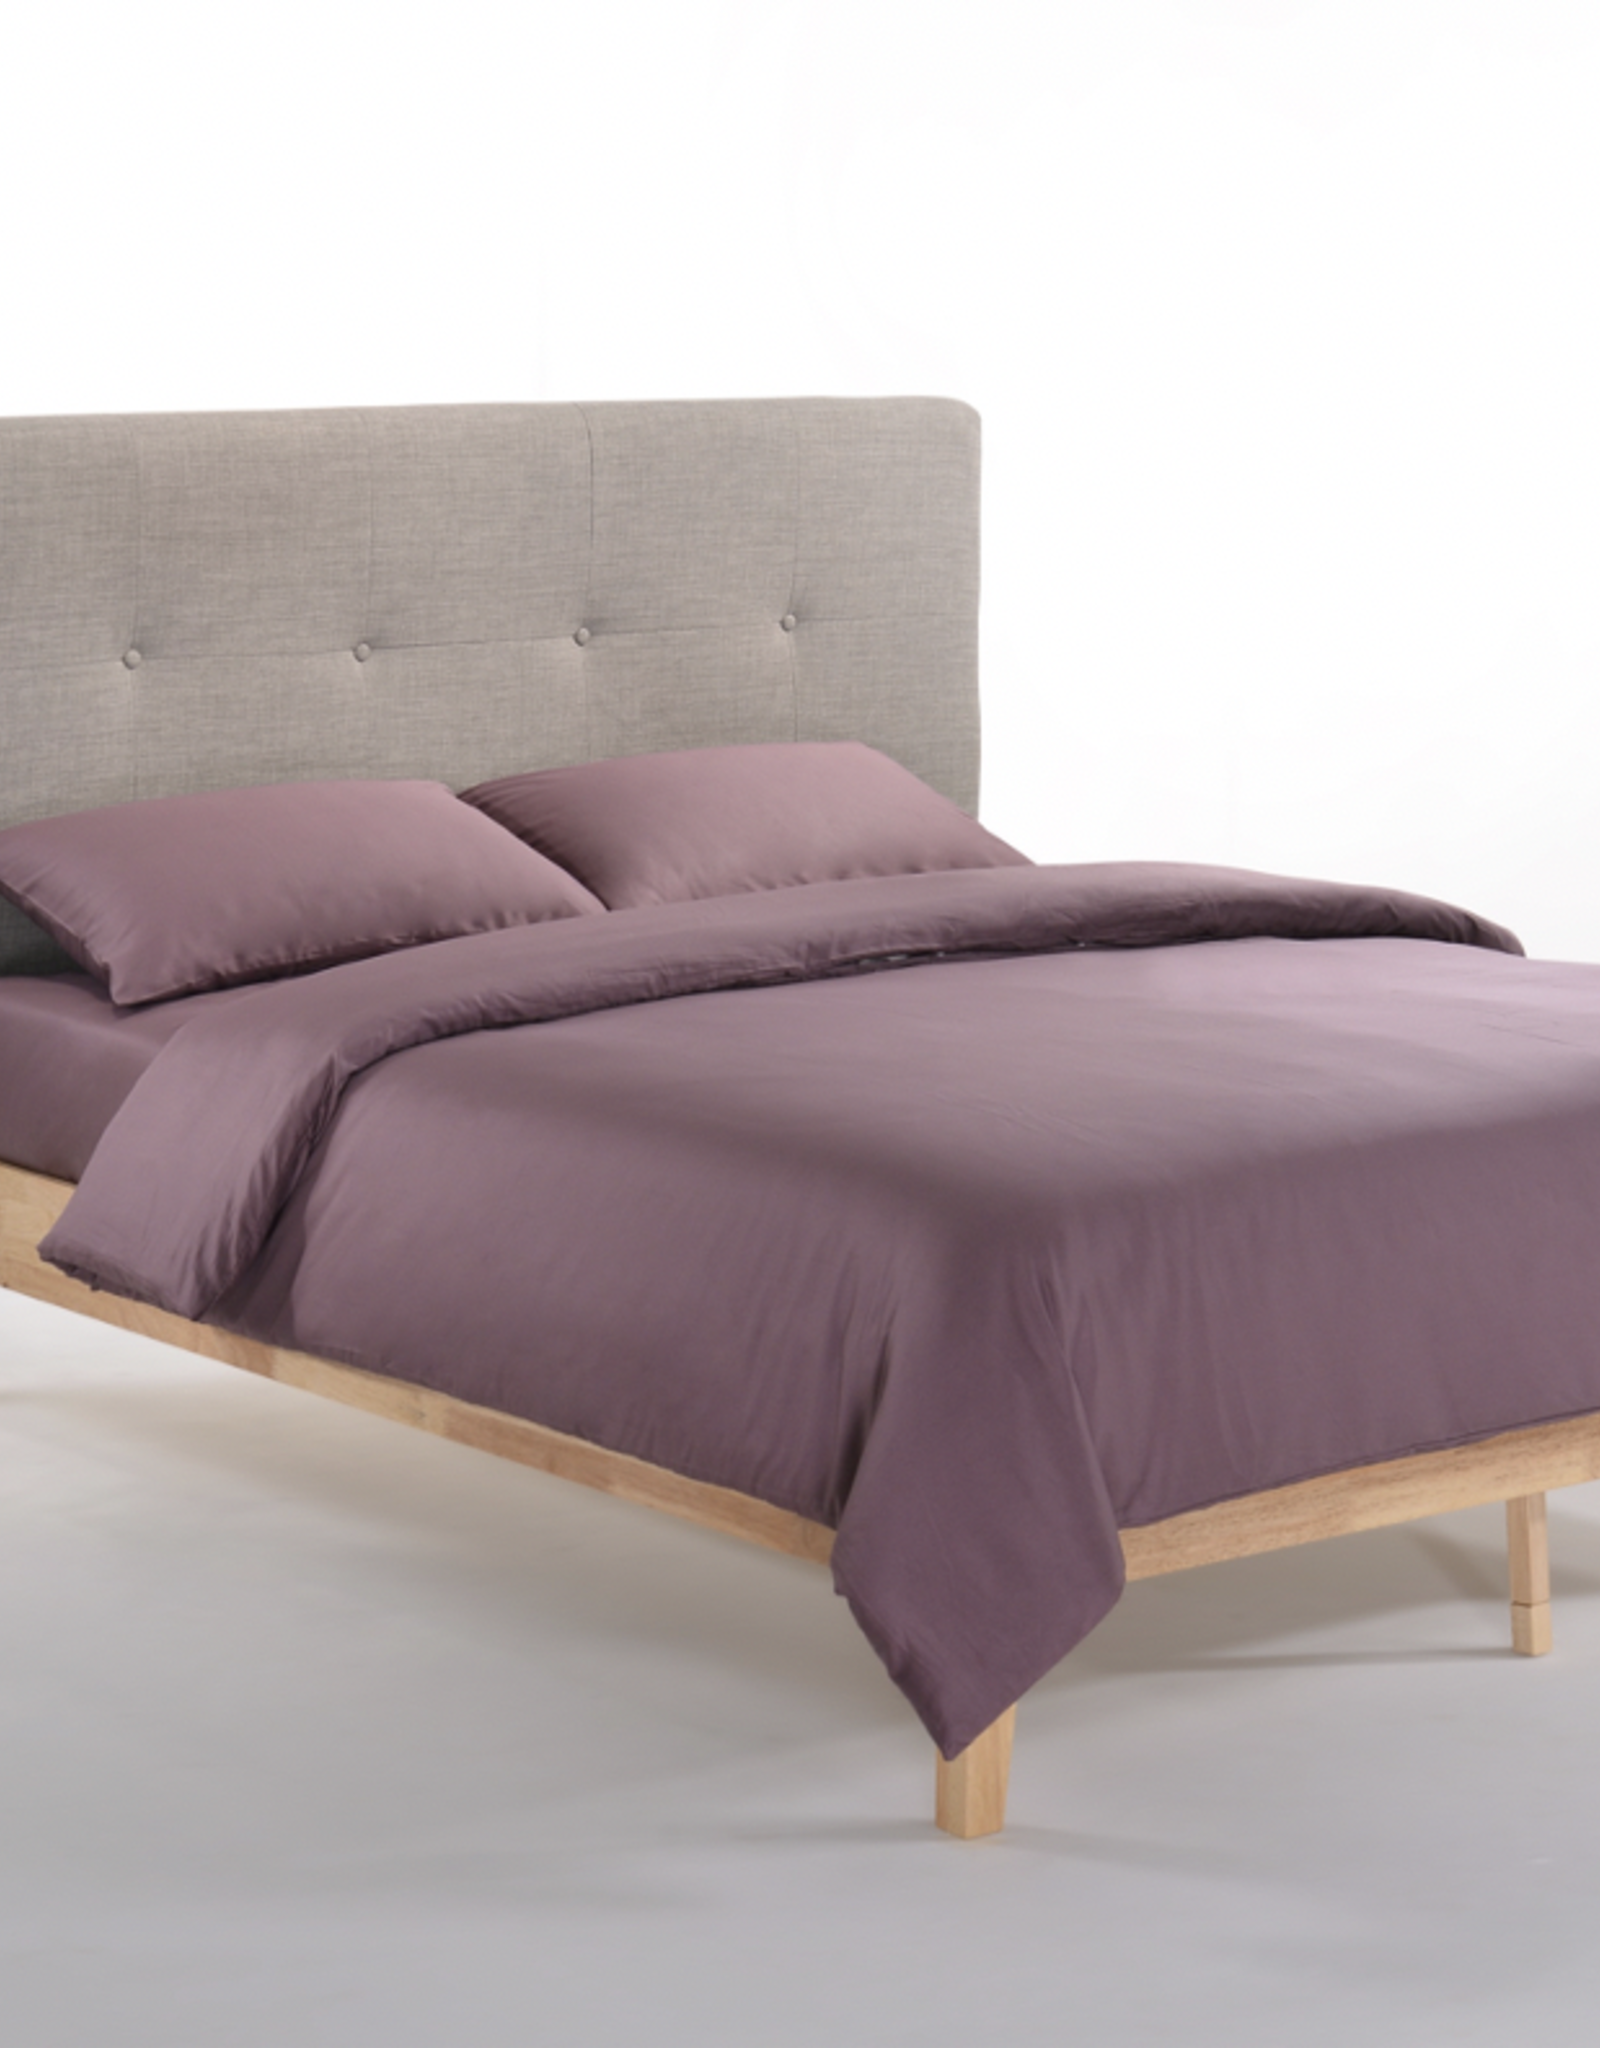 Paprika Platform Bed - Comes in Four Colors